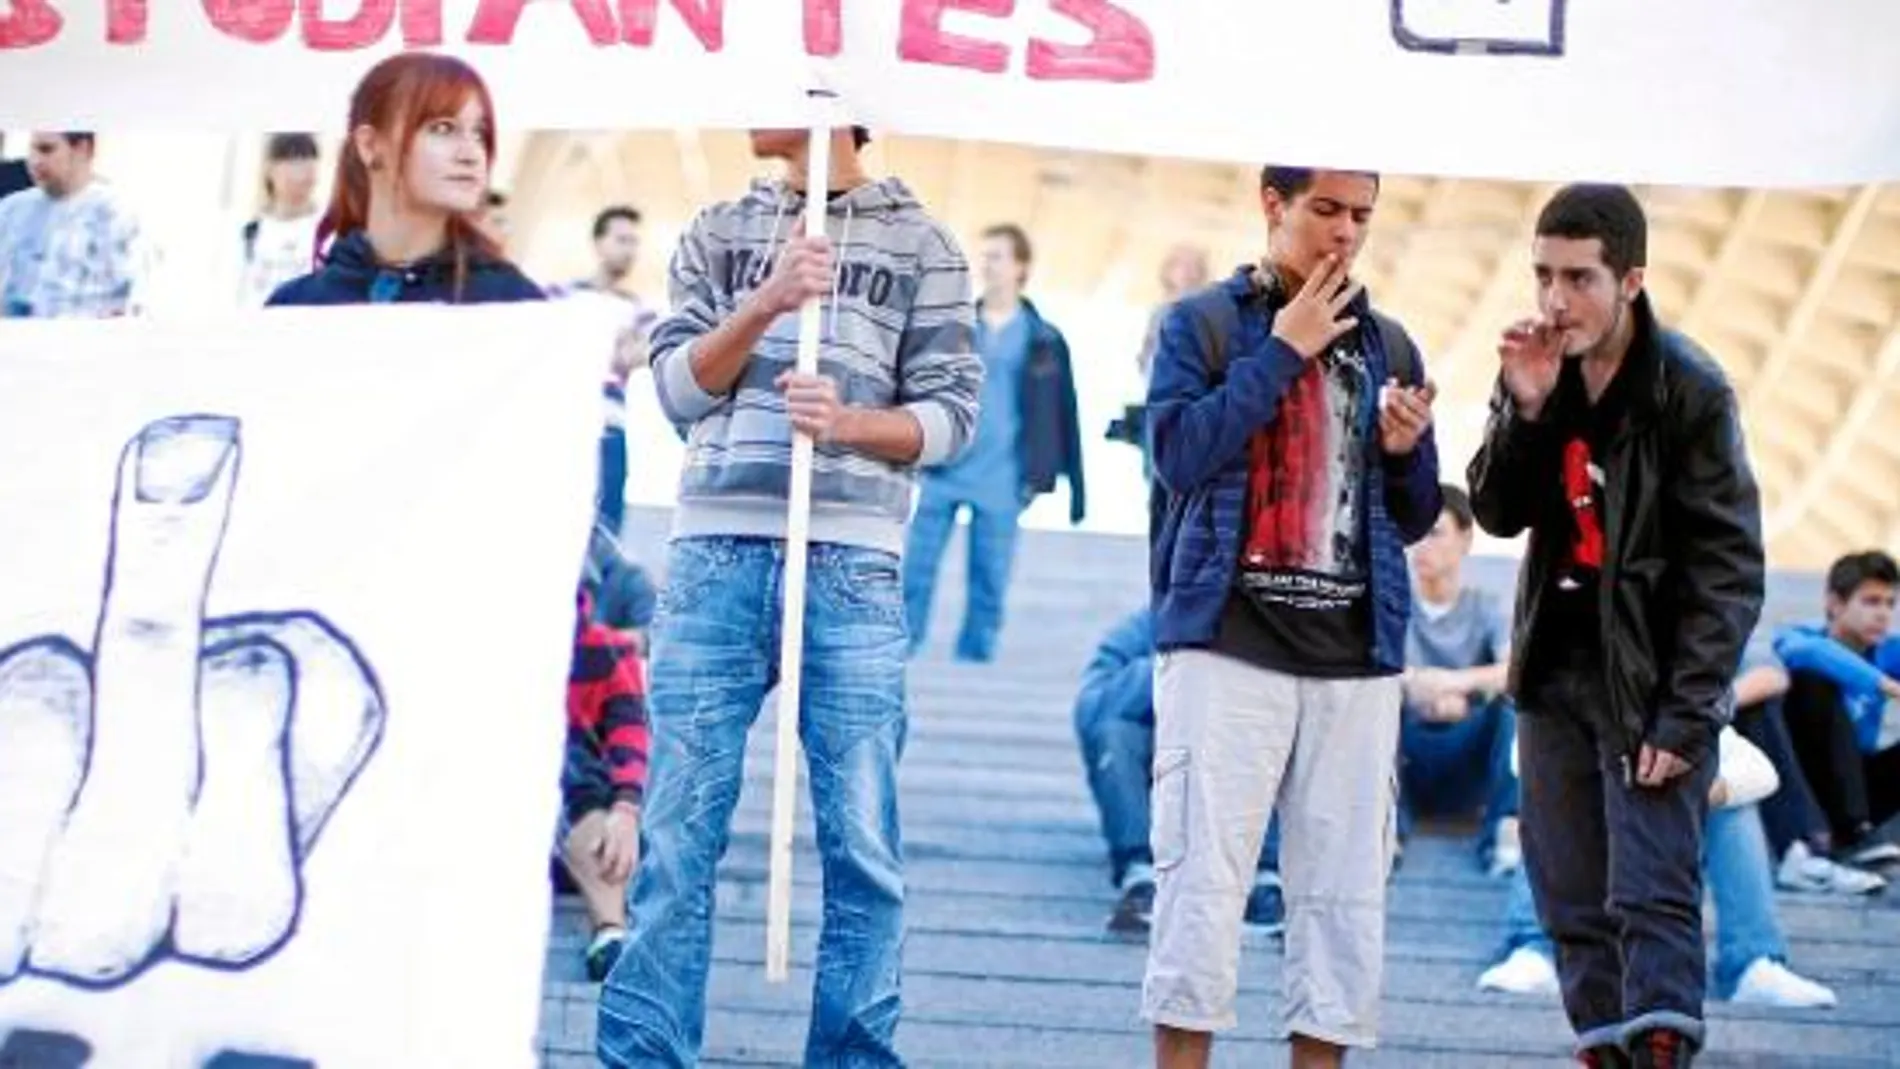 Varios estudiantes andaluces portan pancartas reivindicativas a las puertas de un instituto de Secundaria en Sevilla